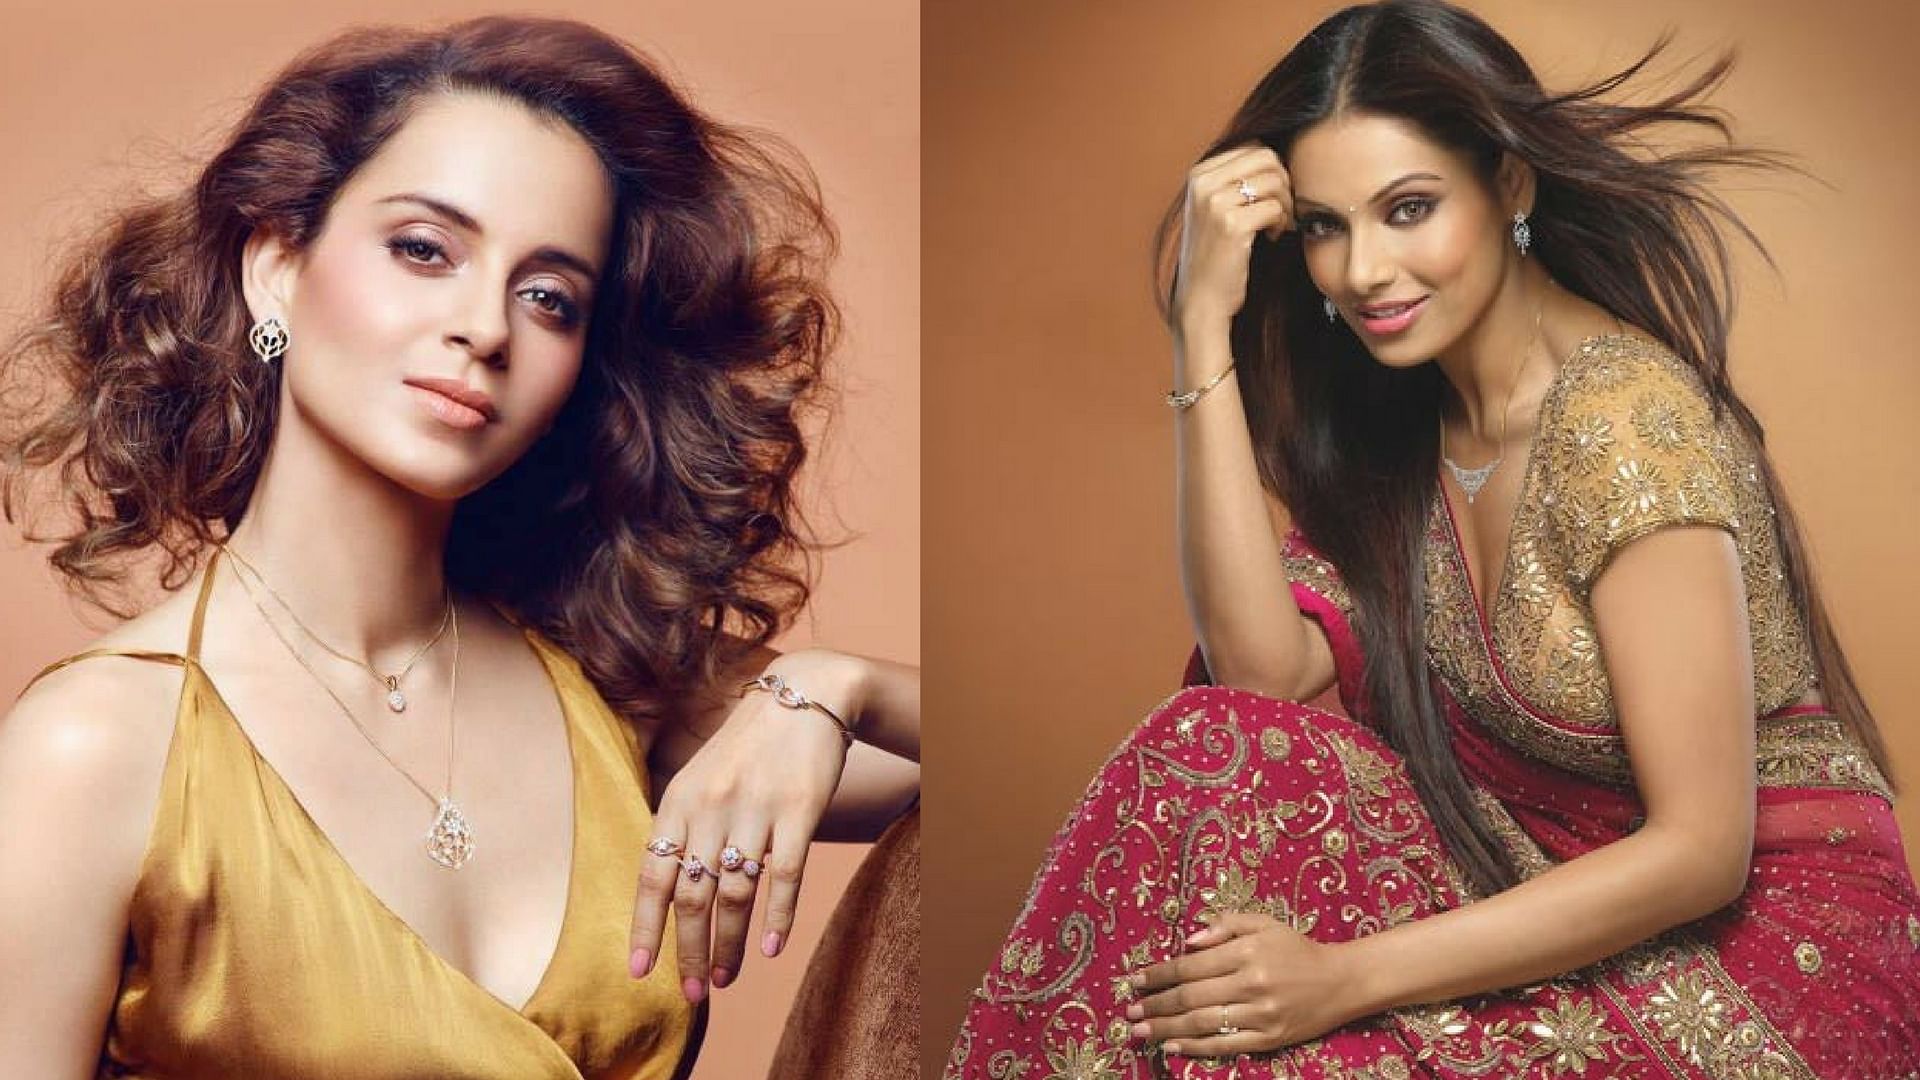 Kanagana Ranaut and Bipasha Basu in the jewellery ads of the brand.&nbsp;